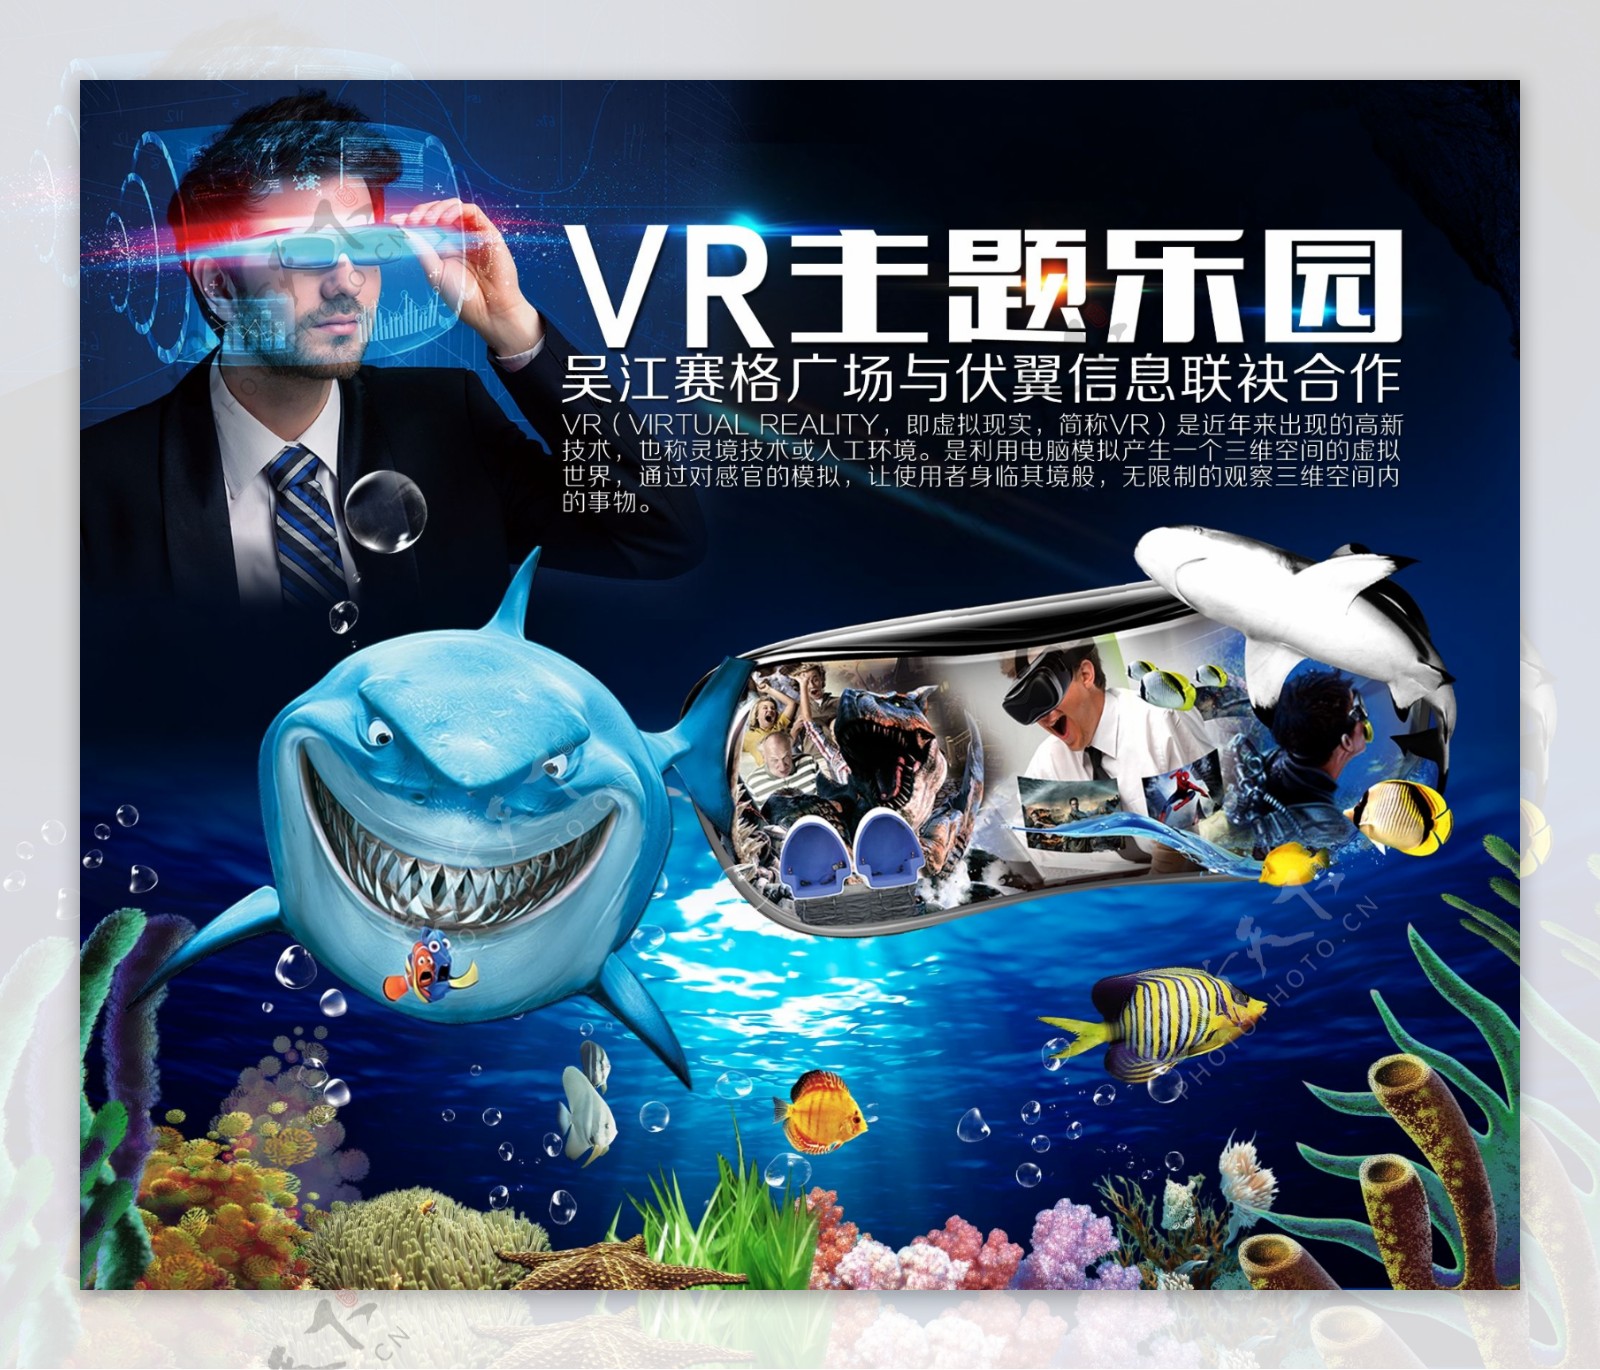 VR视觉宣传海报